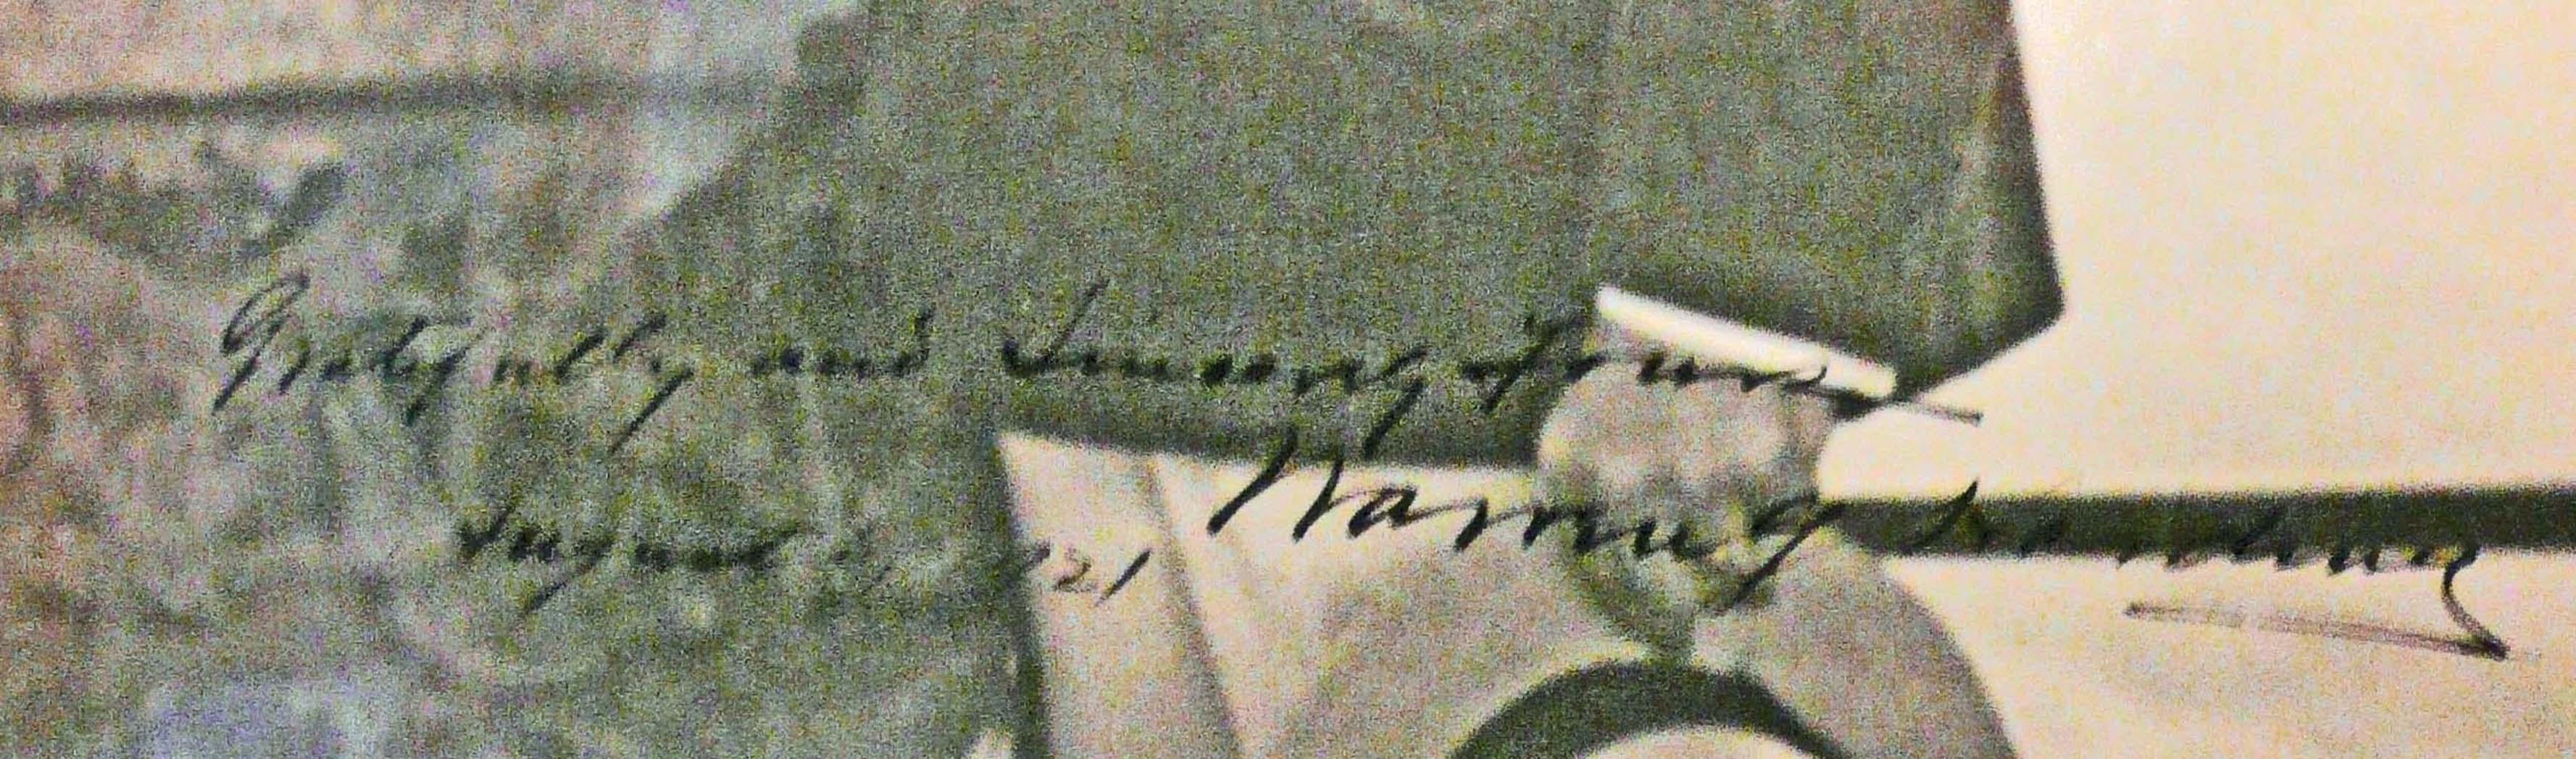 Shorey, Charles Urban.  WARREN G. HARDING SIGNED, INSCRIBED AND DATED PHOTOGRAPH. Original gelatin silver photograph, 1921. 
Inscribed and signed on the photograph, lower center, 